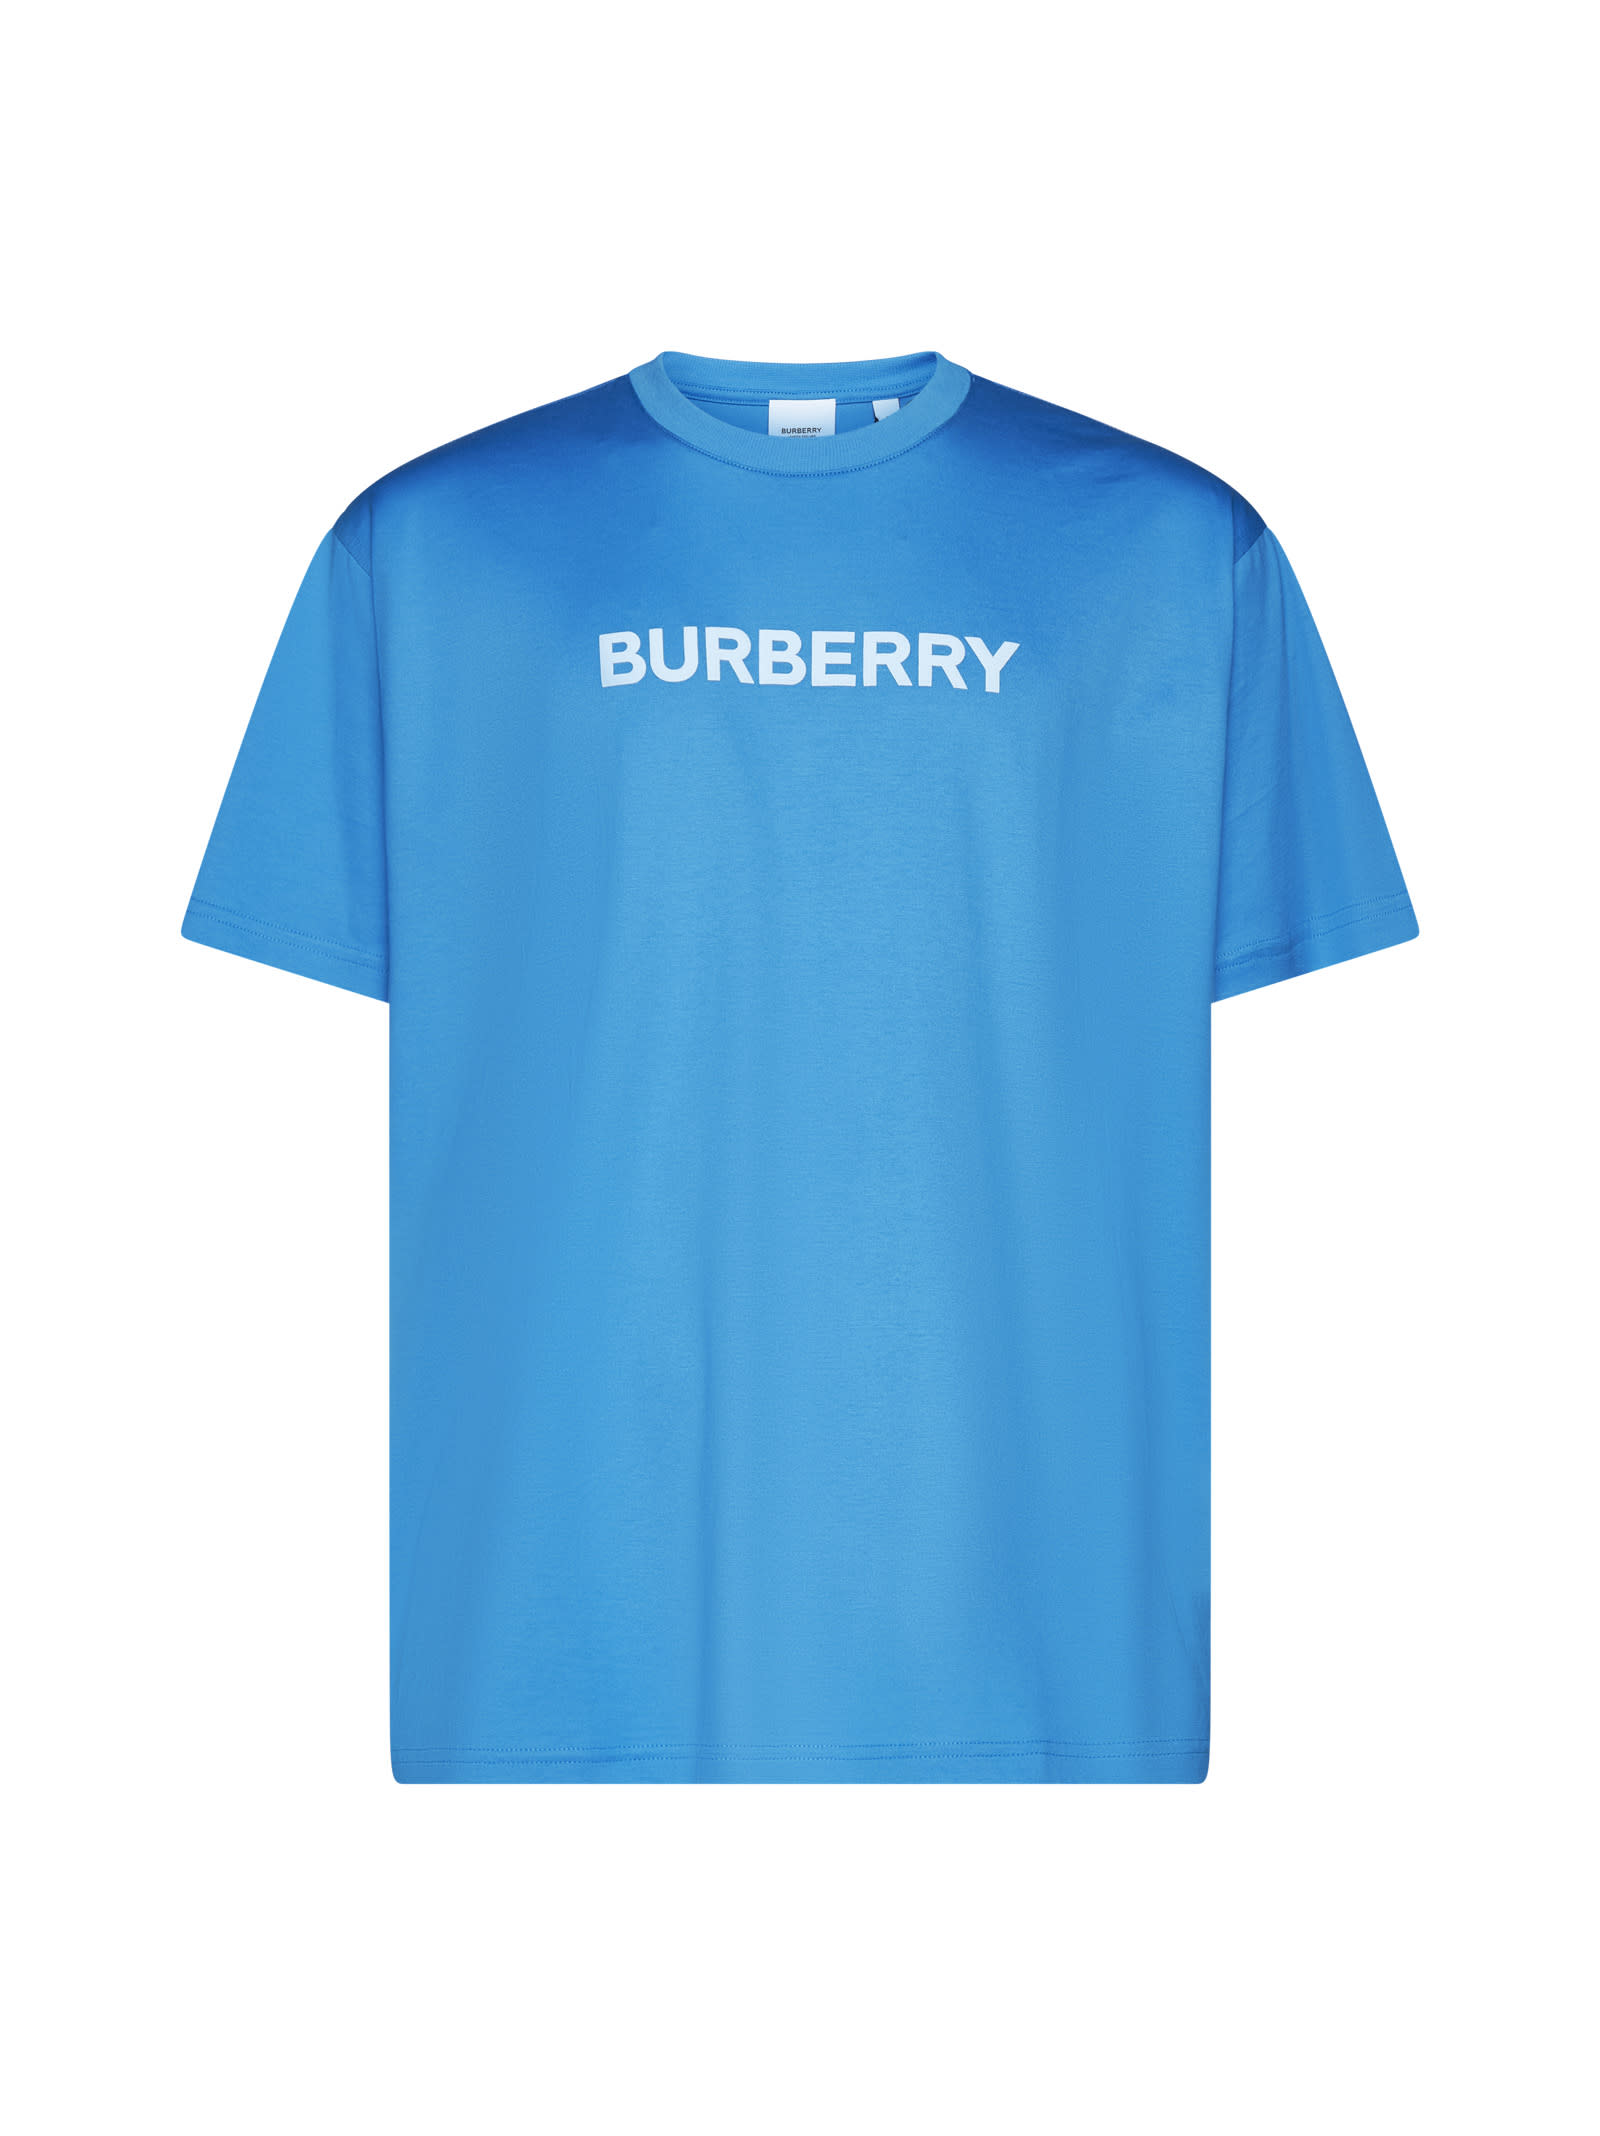 BURBERRY T-SHIRT